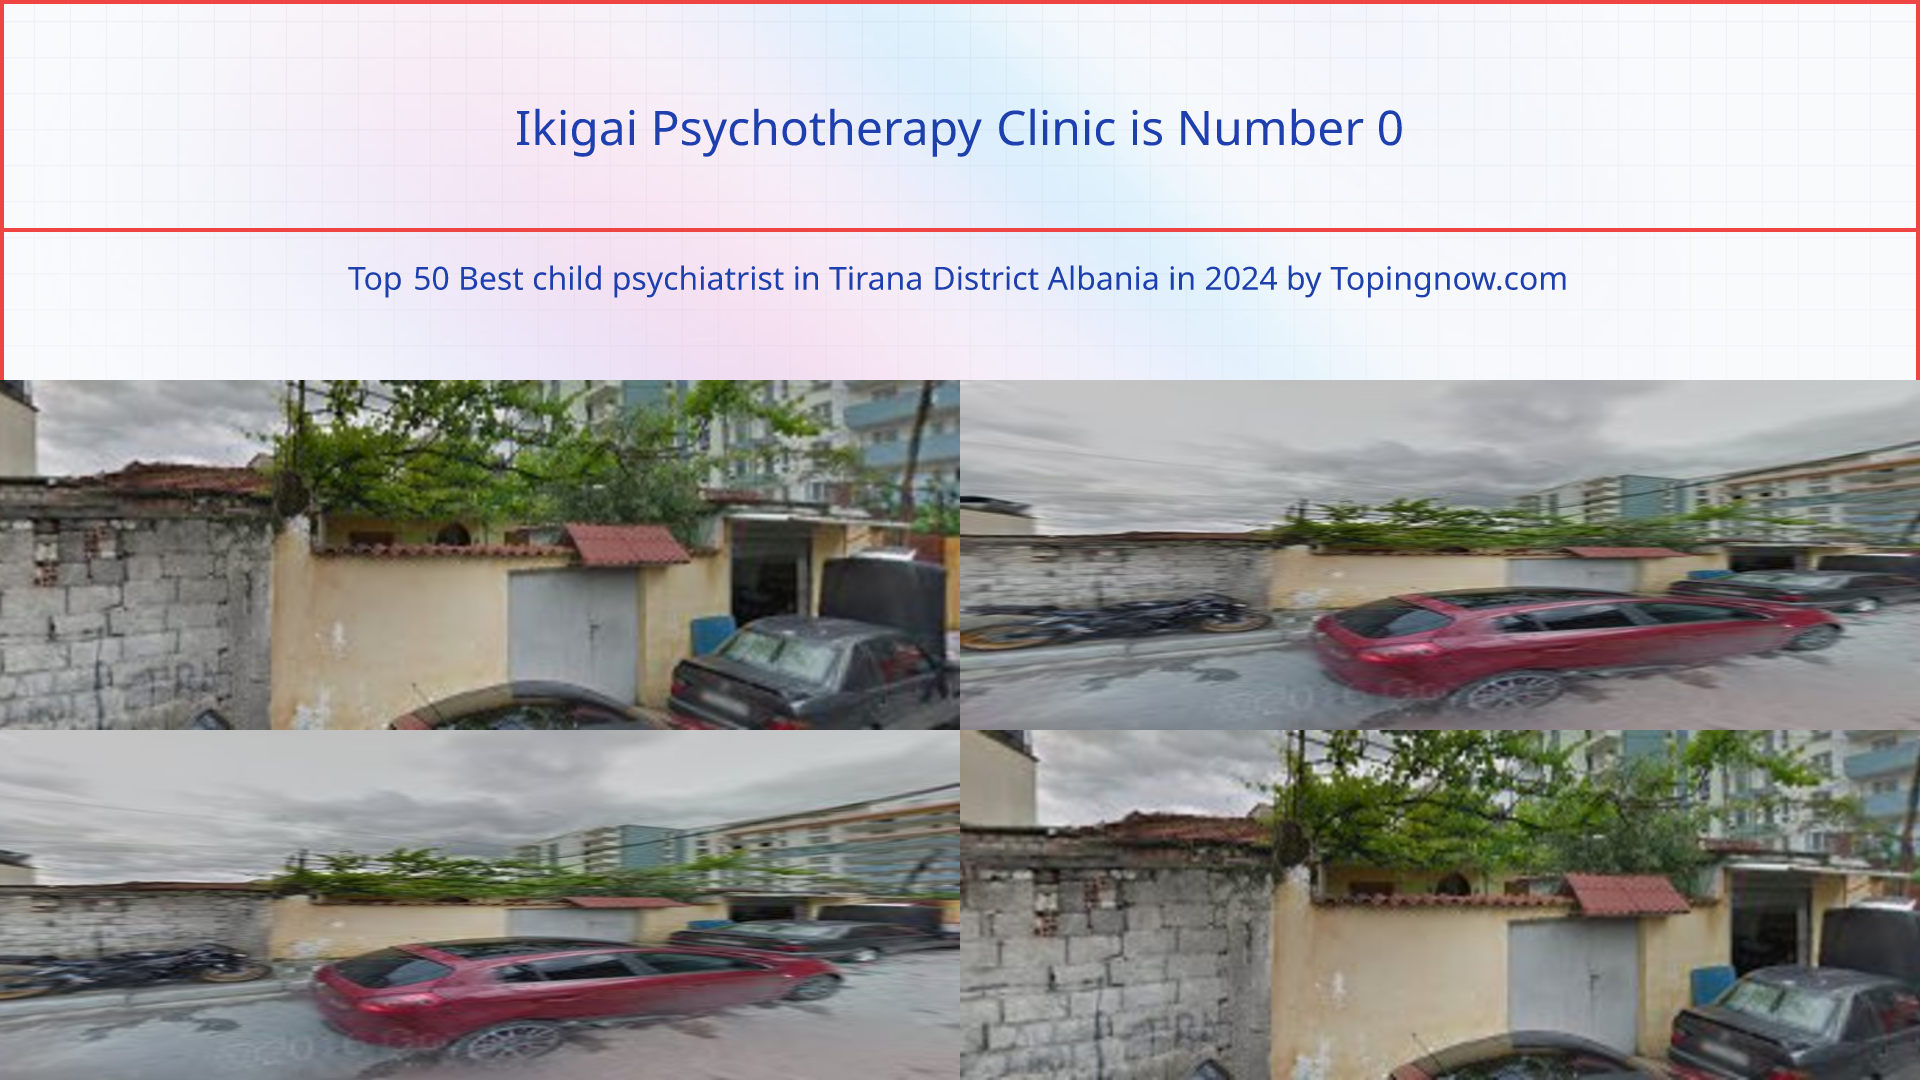 Ikigai Psychotherapy Clinic: Top 50 Best child psychiatrist in Tirana District Albania in 2024